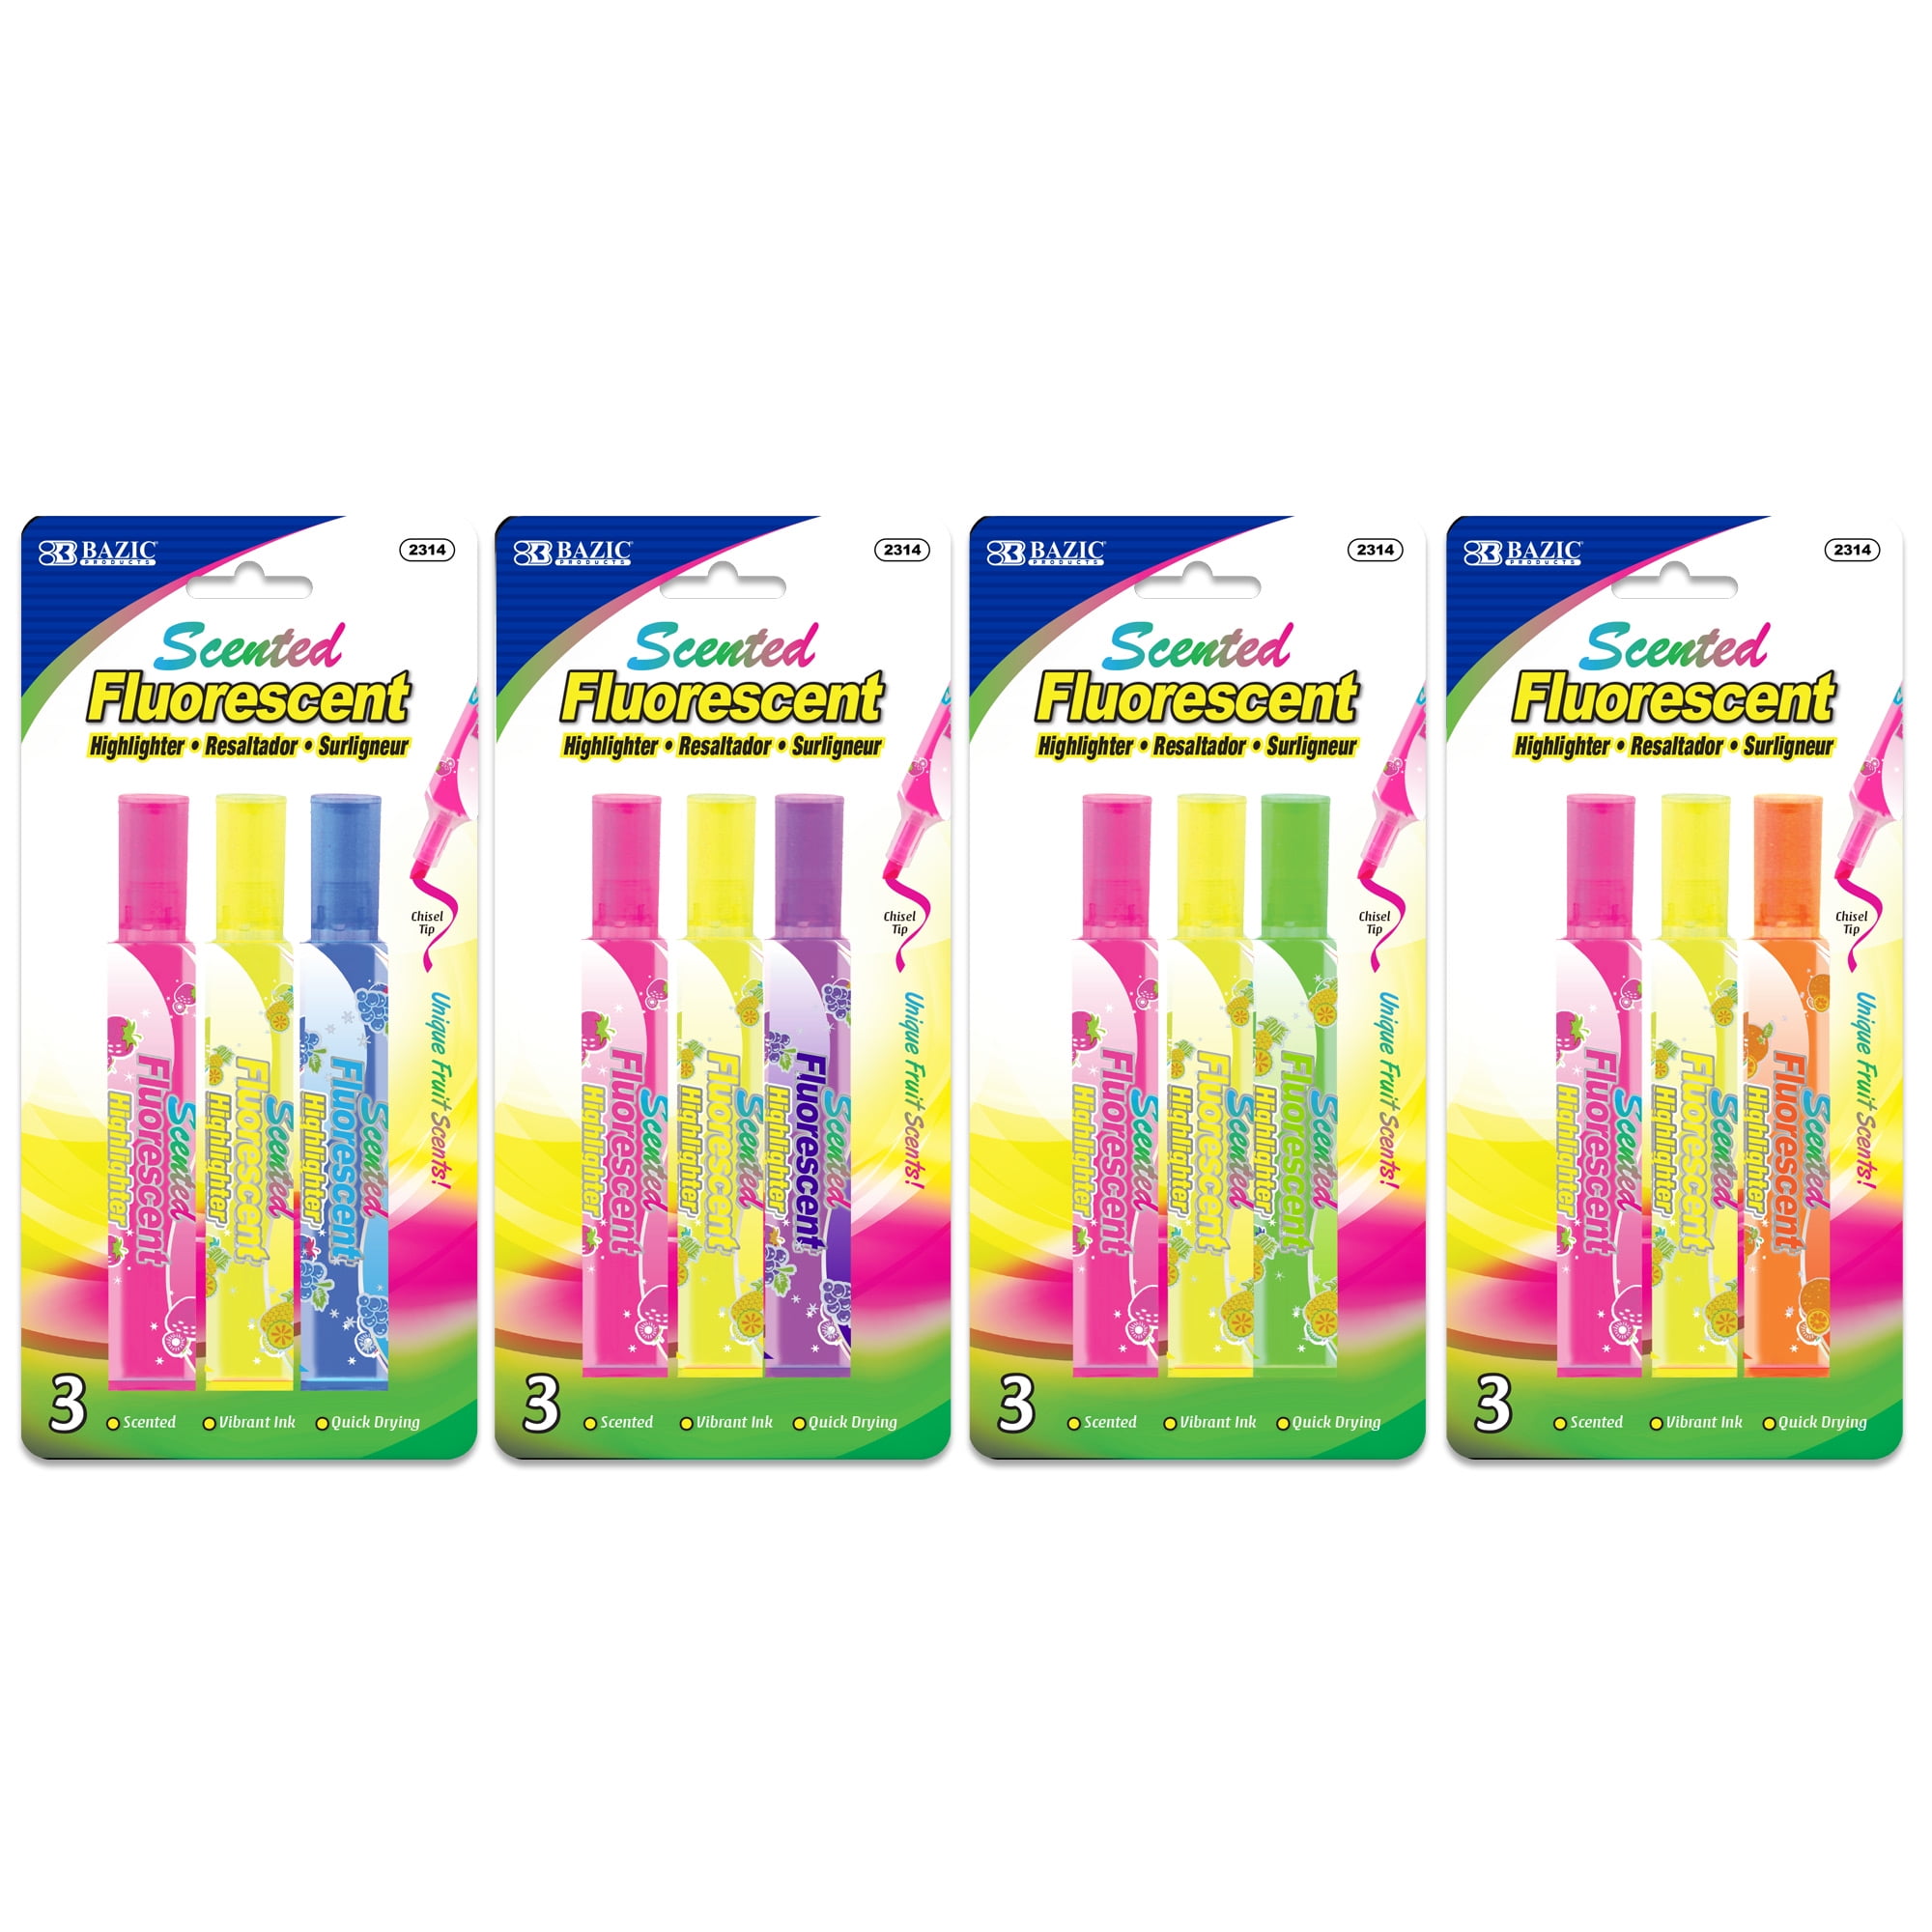 feela Bible Gel Highlighter study kit (8 Bright Colors)